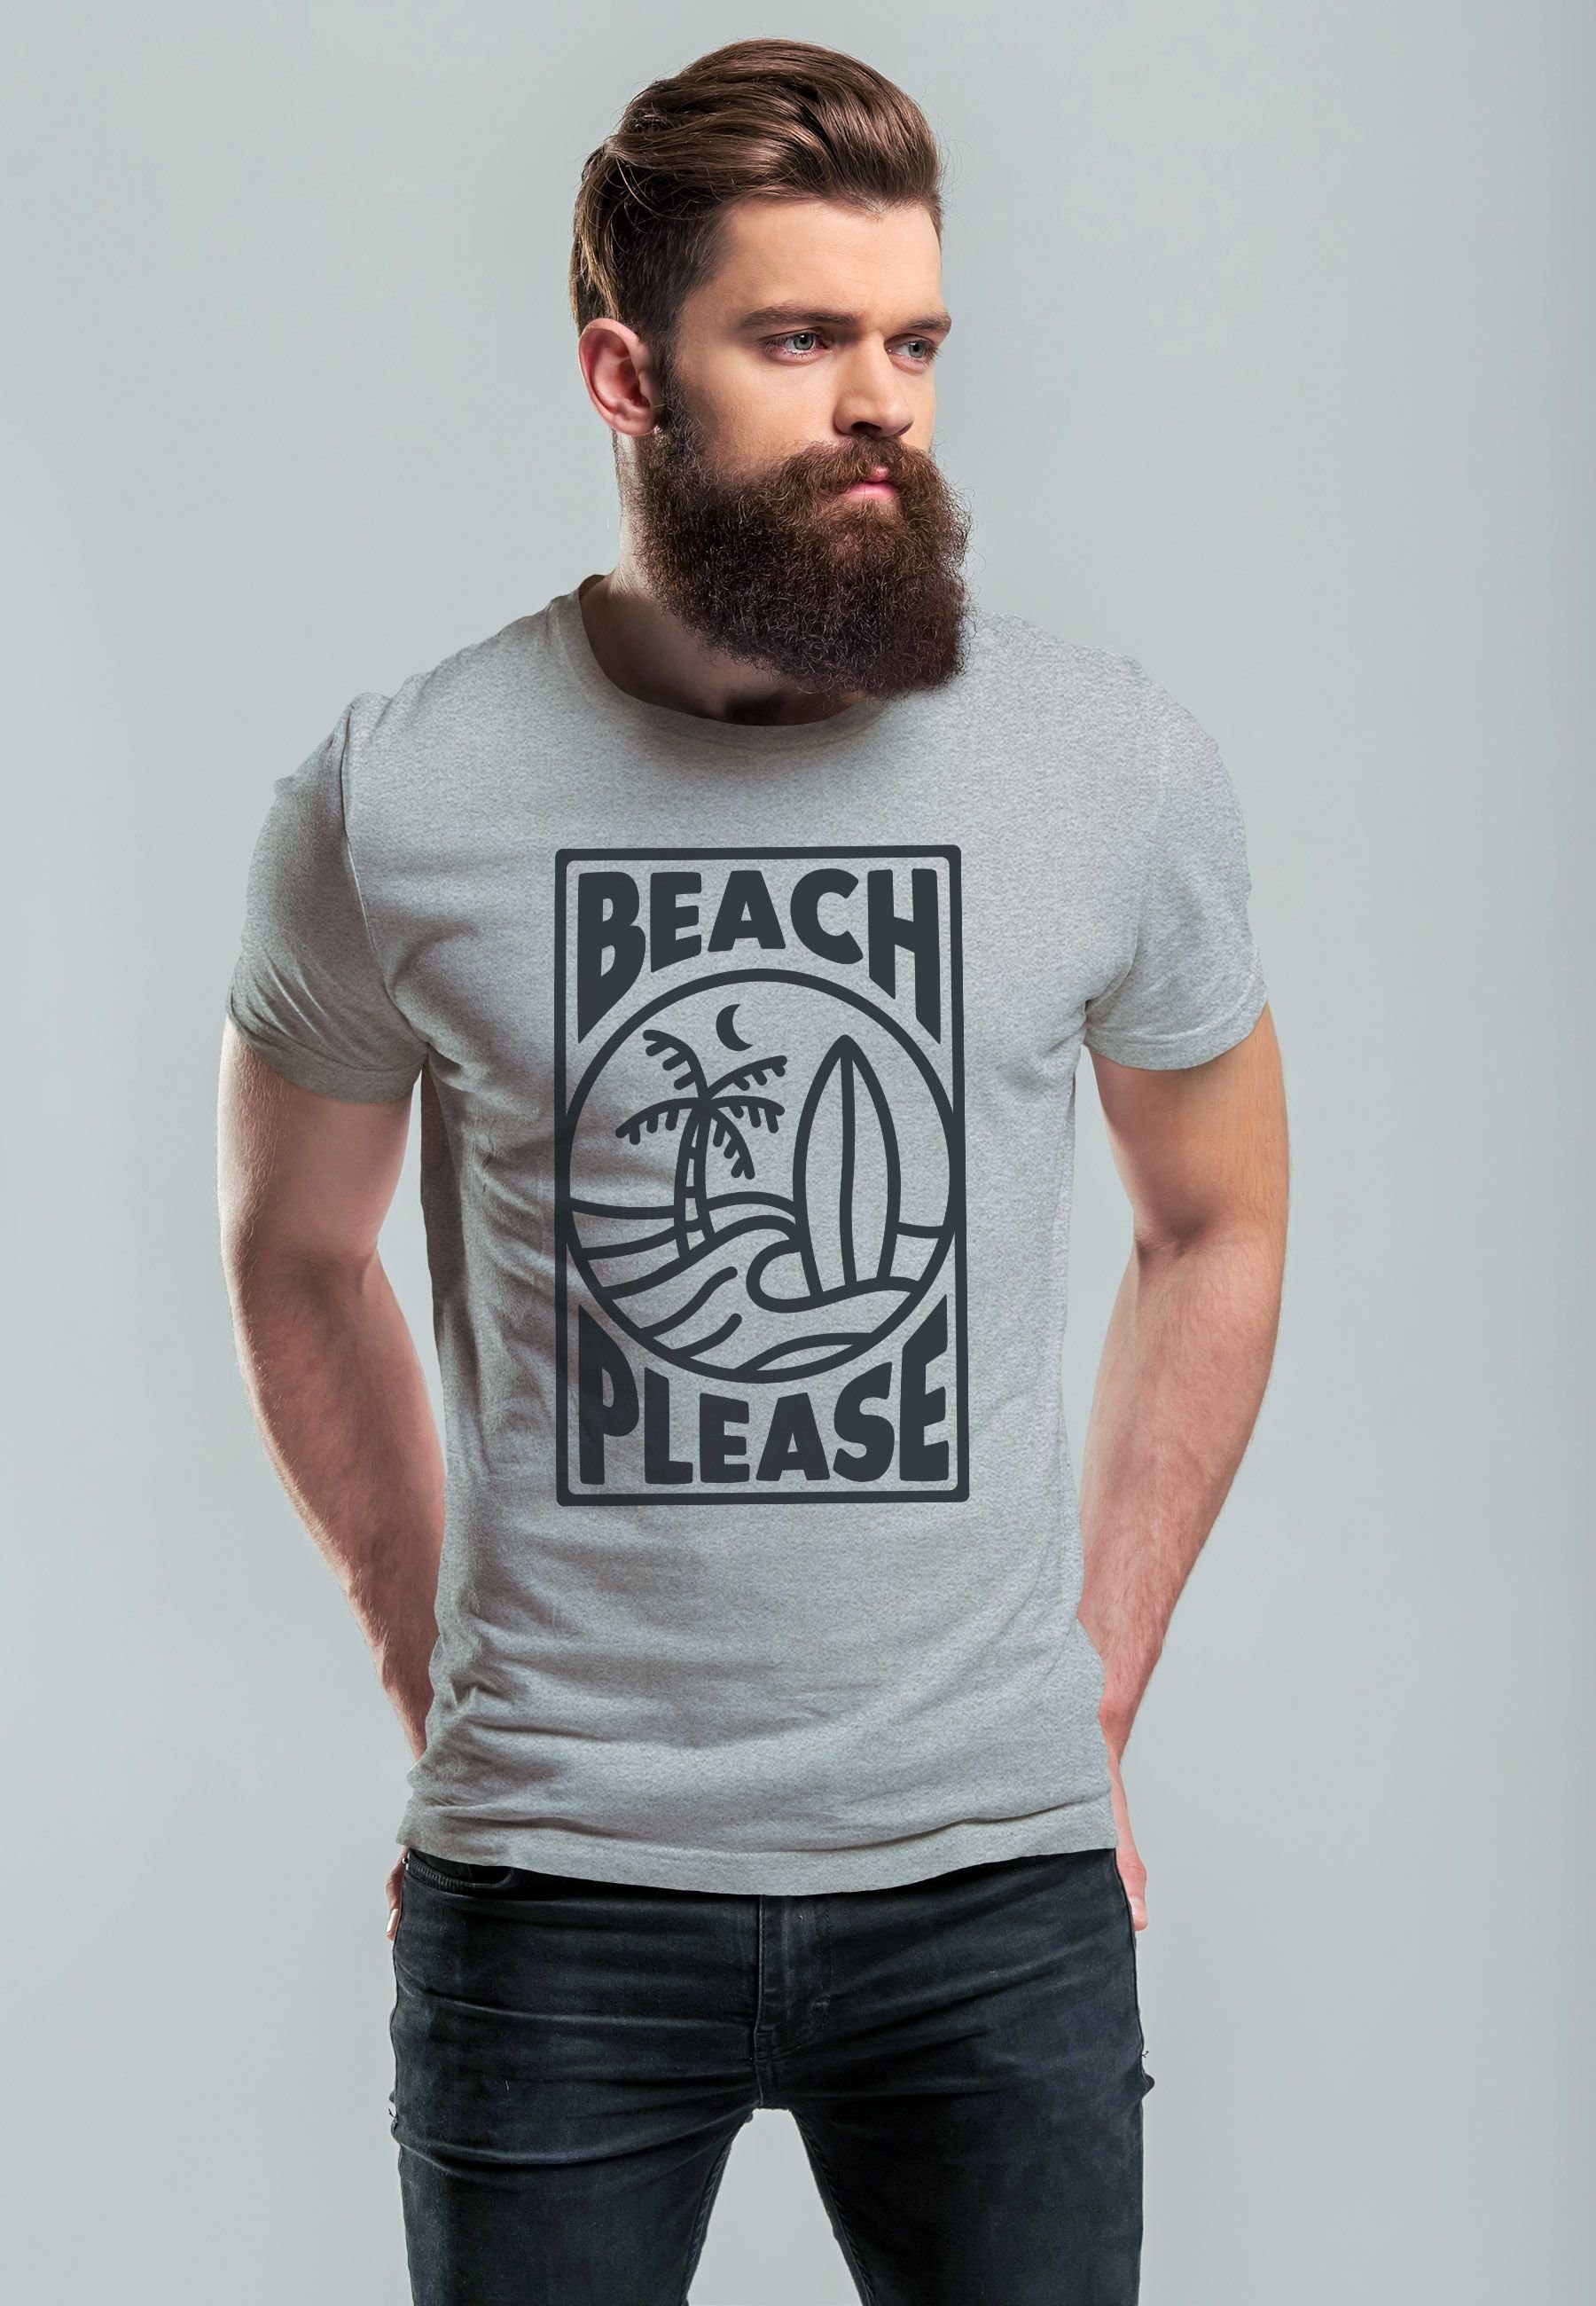 Neverless Print-Shirt Please Welle mit Surfboard Print Beach Wave Print Sommer T-Shirt Surfing Herren grau